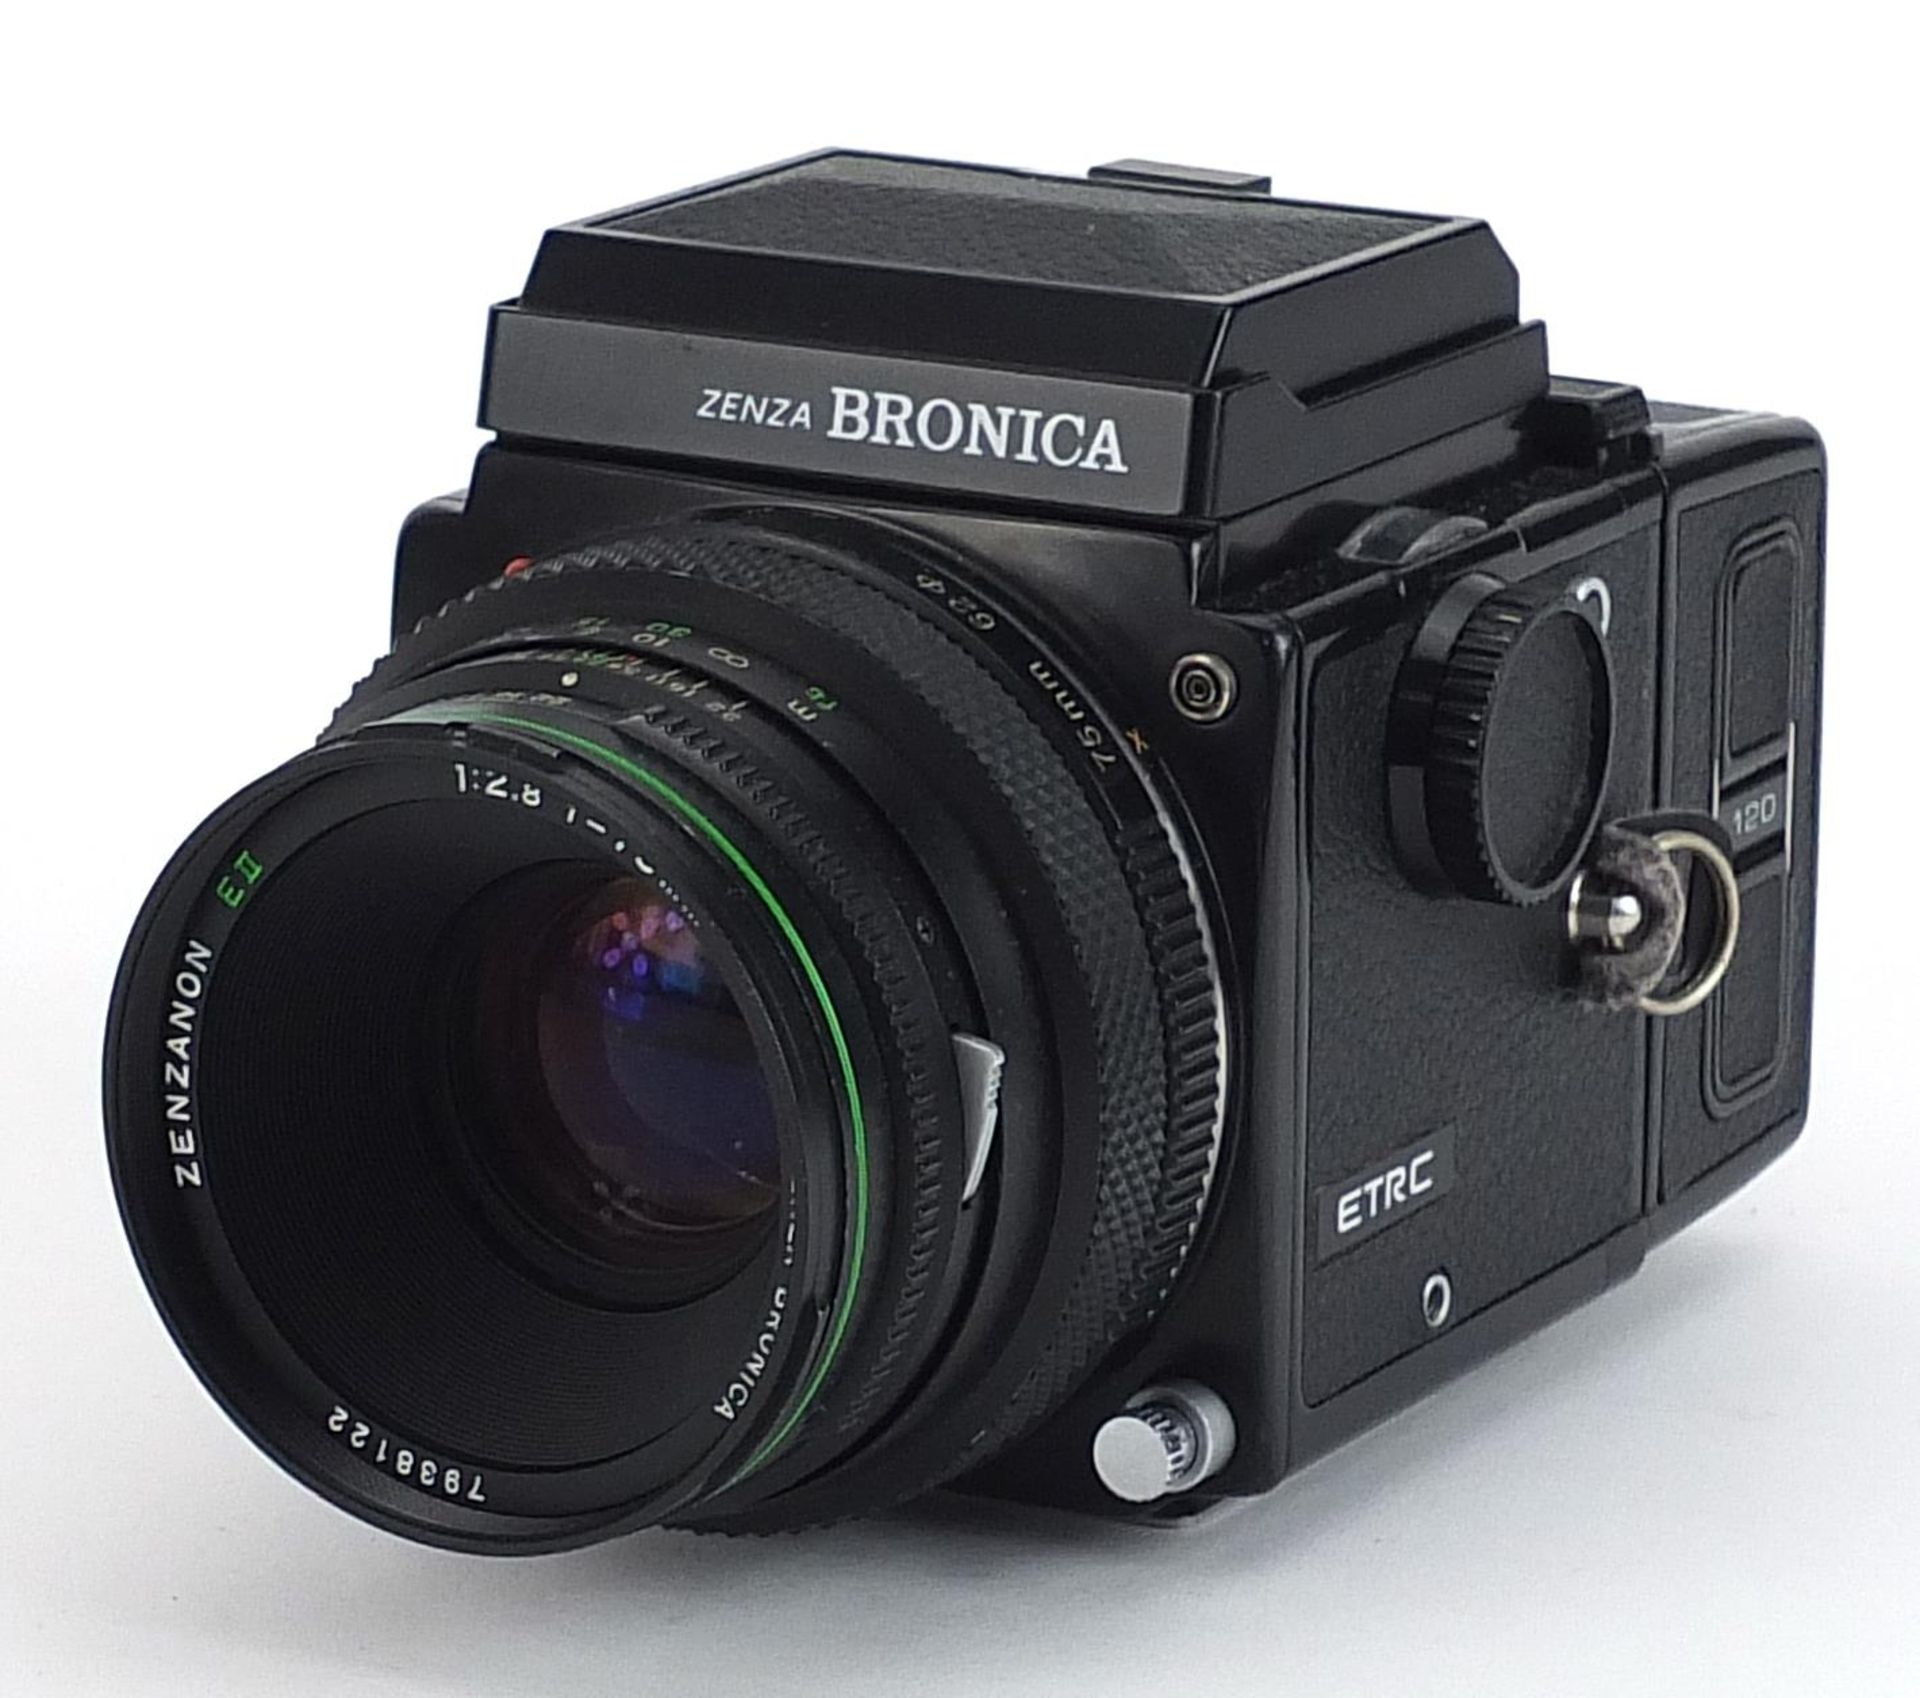 Zenza Bronica ETRC film camera with 75mm lens - Bild 2 aus 4